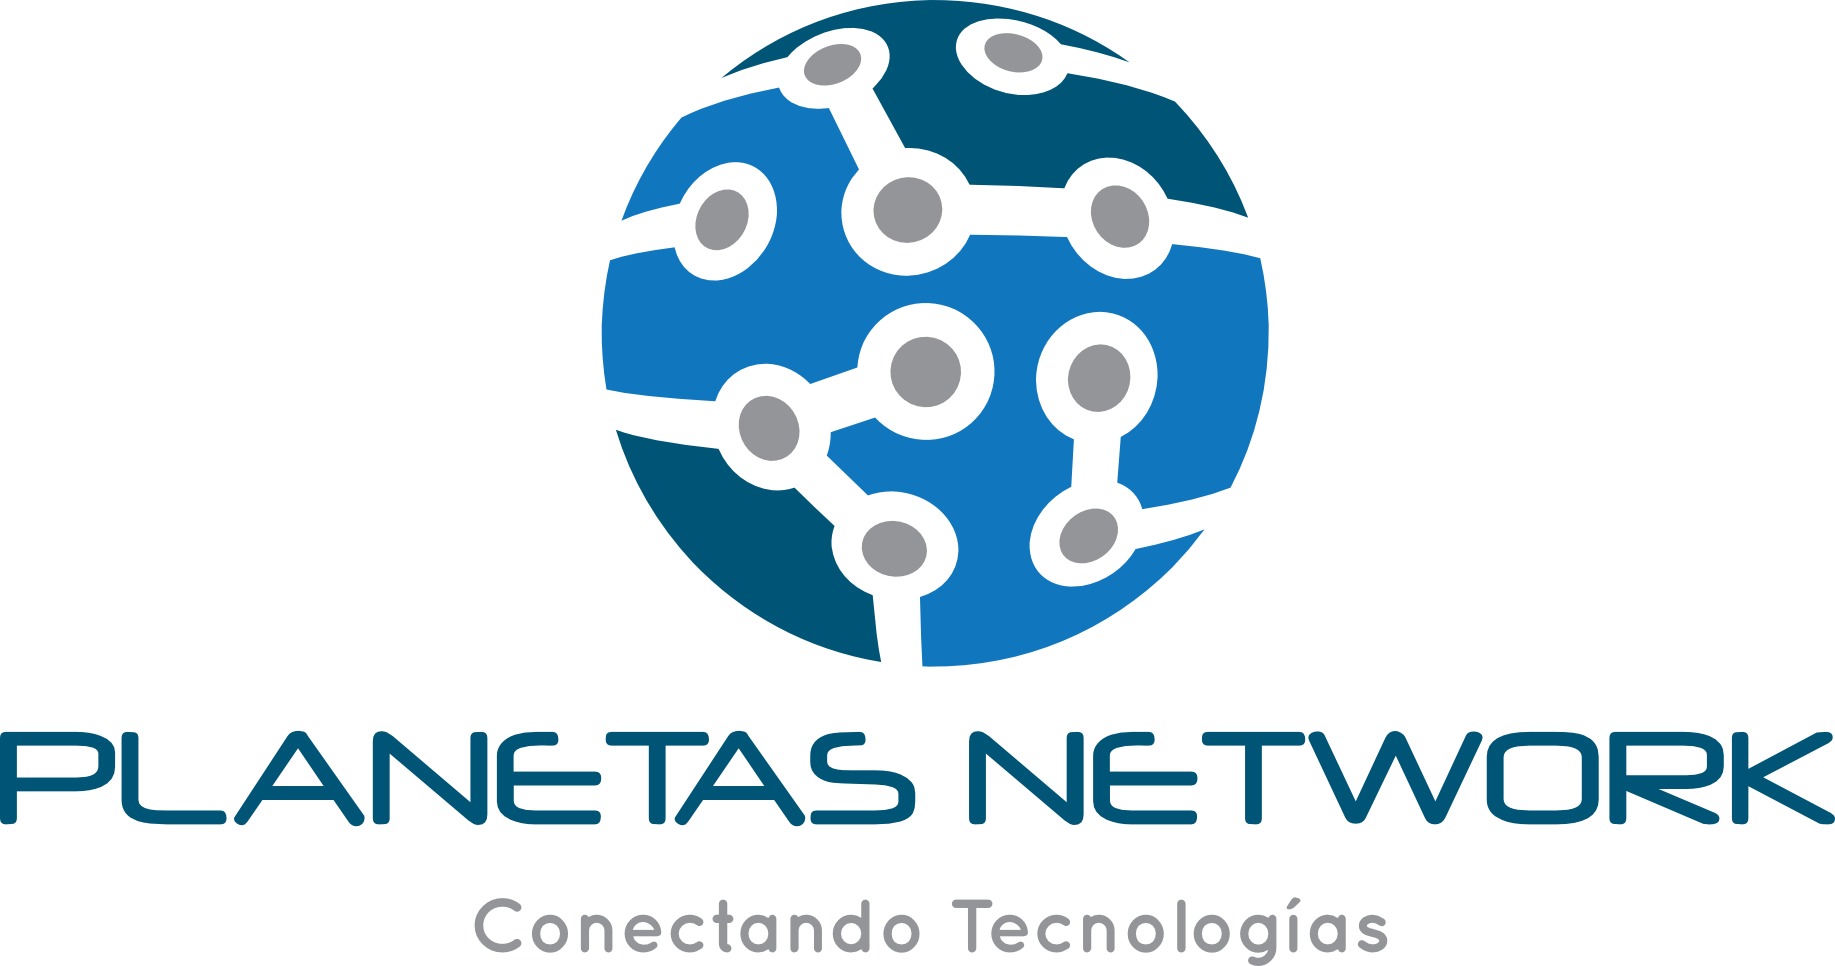 Planetas Network